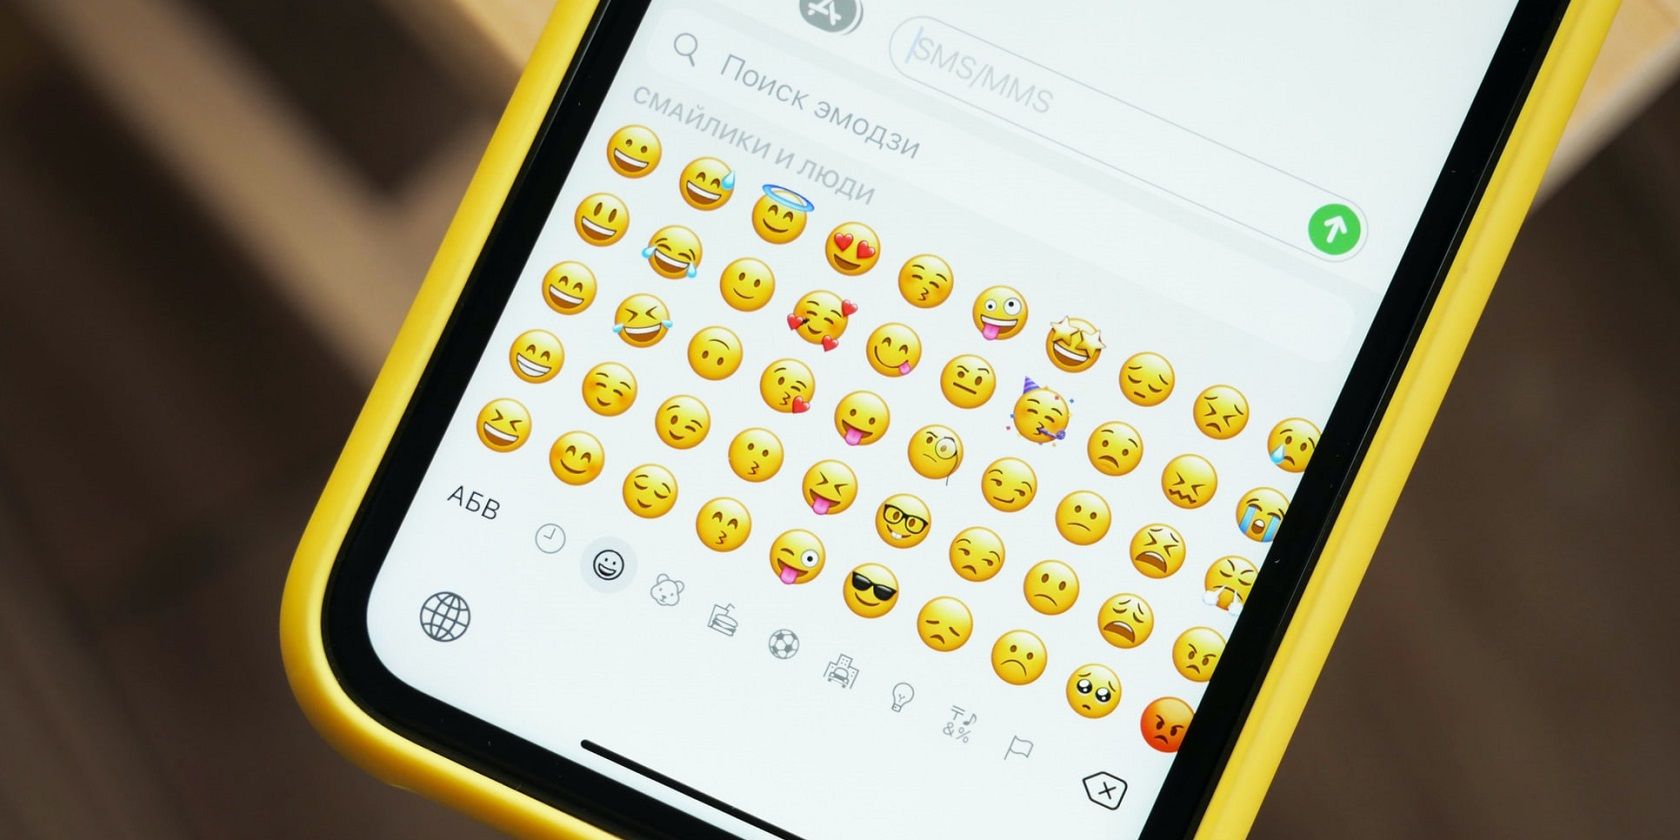 Emojis on Phone Keyboard